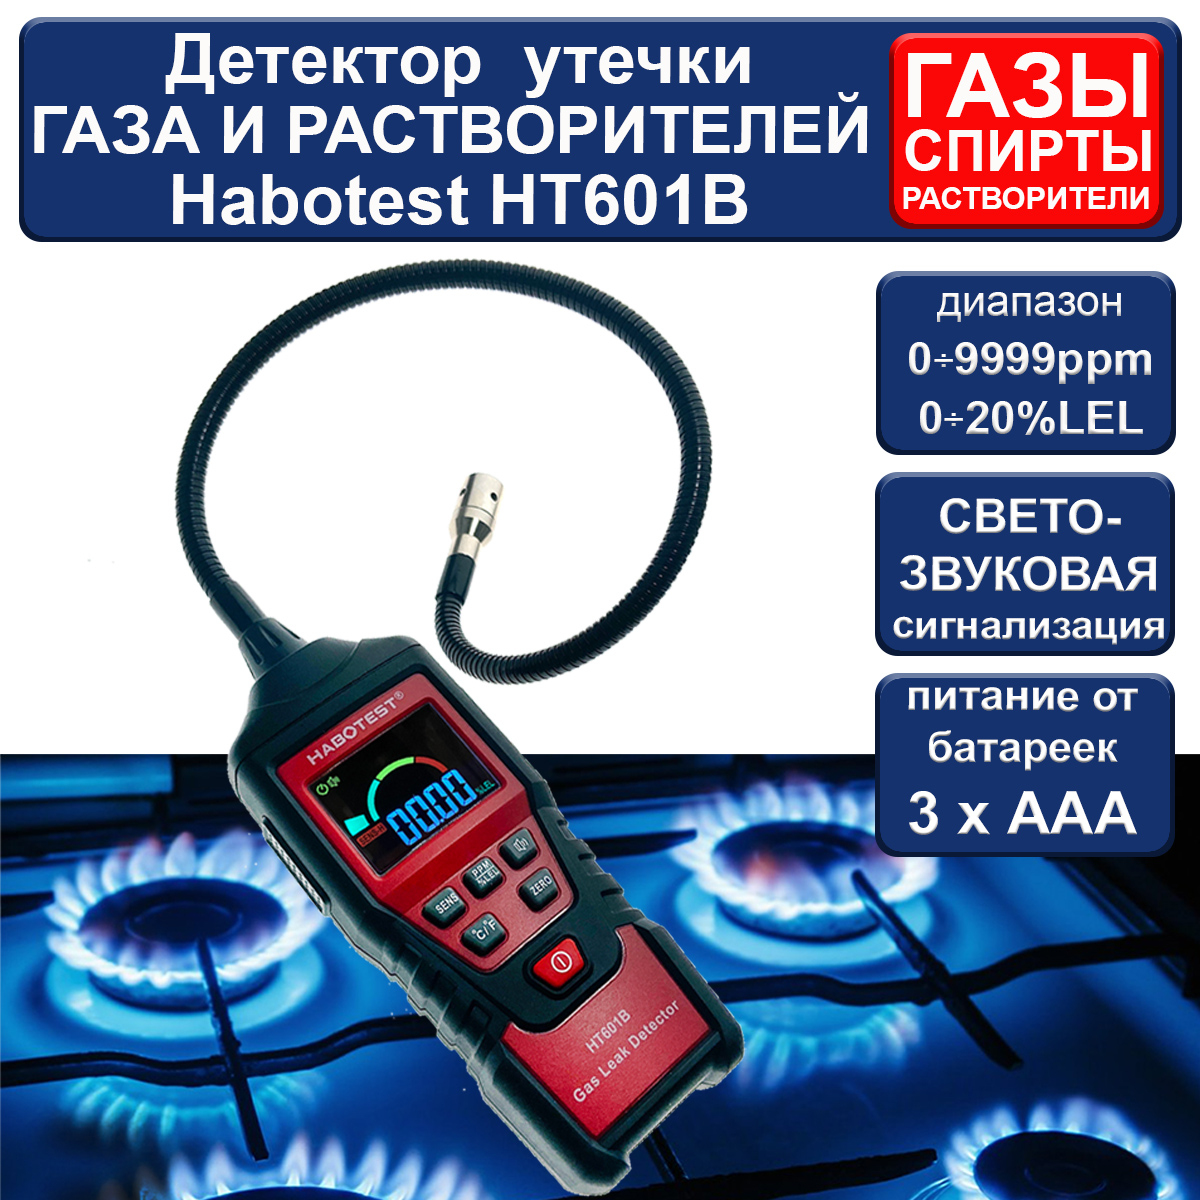 Детектор утечки газа Habotest HT601B детектор утечки газа habotest ht601b